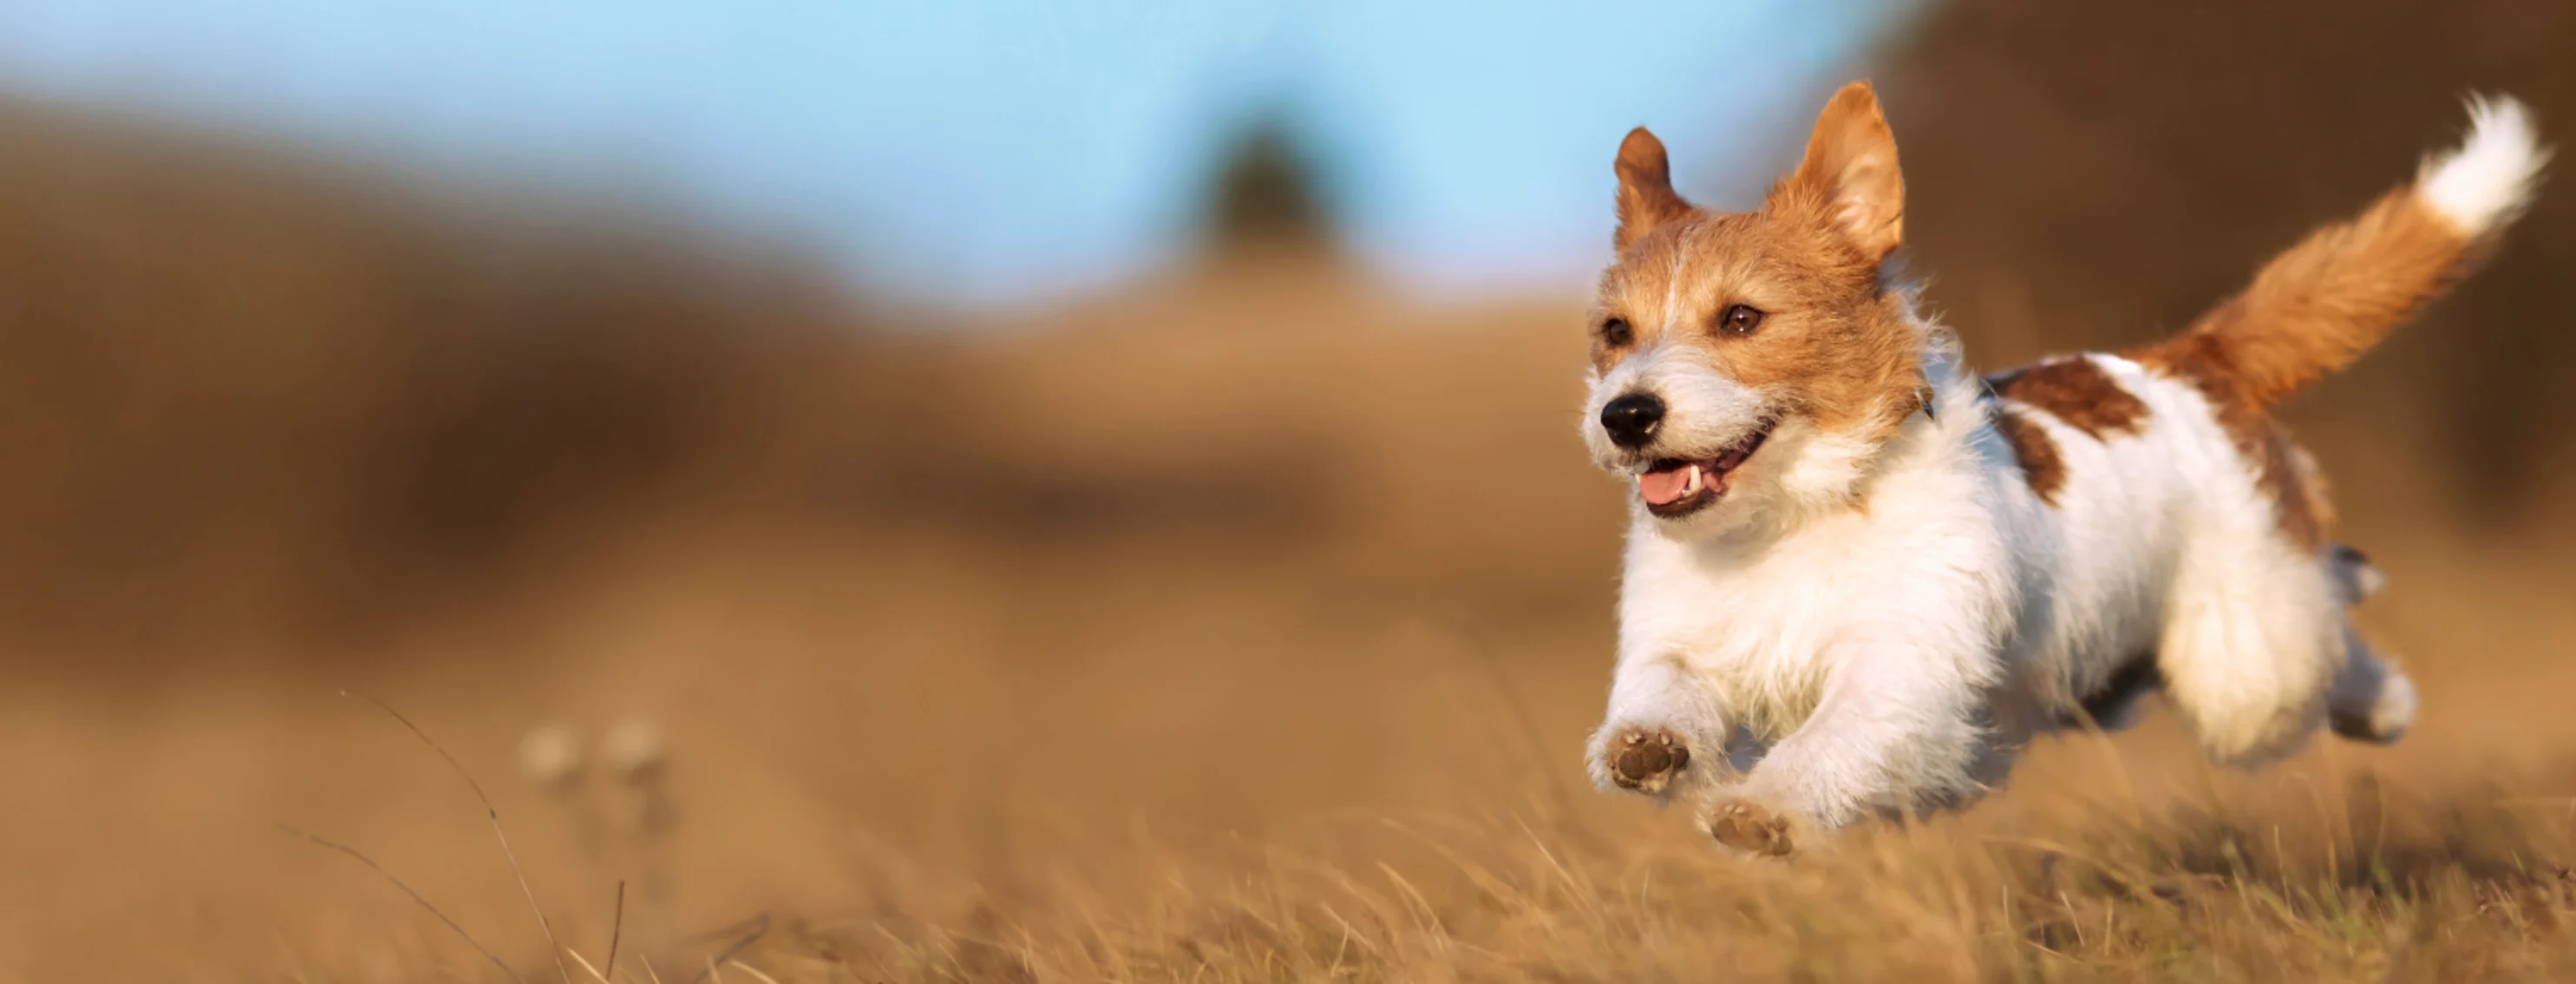 Playful Dog Running, Jumping in Brown Grass